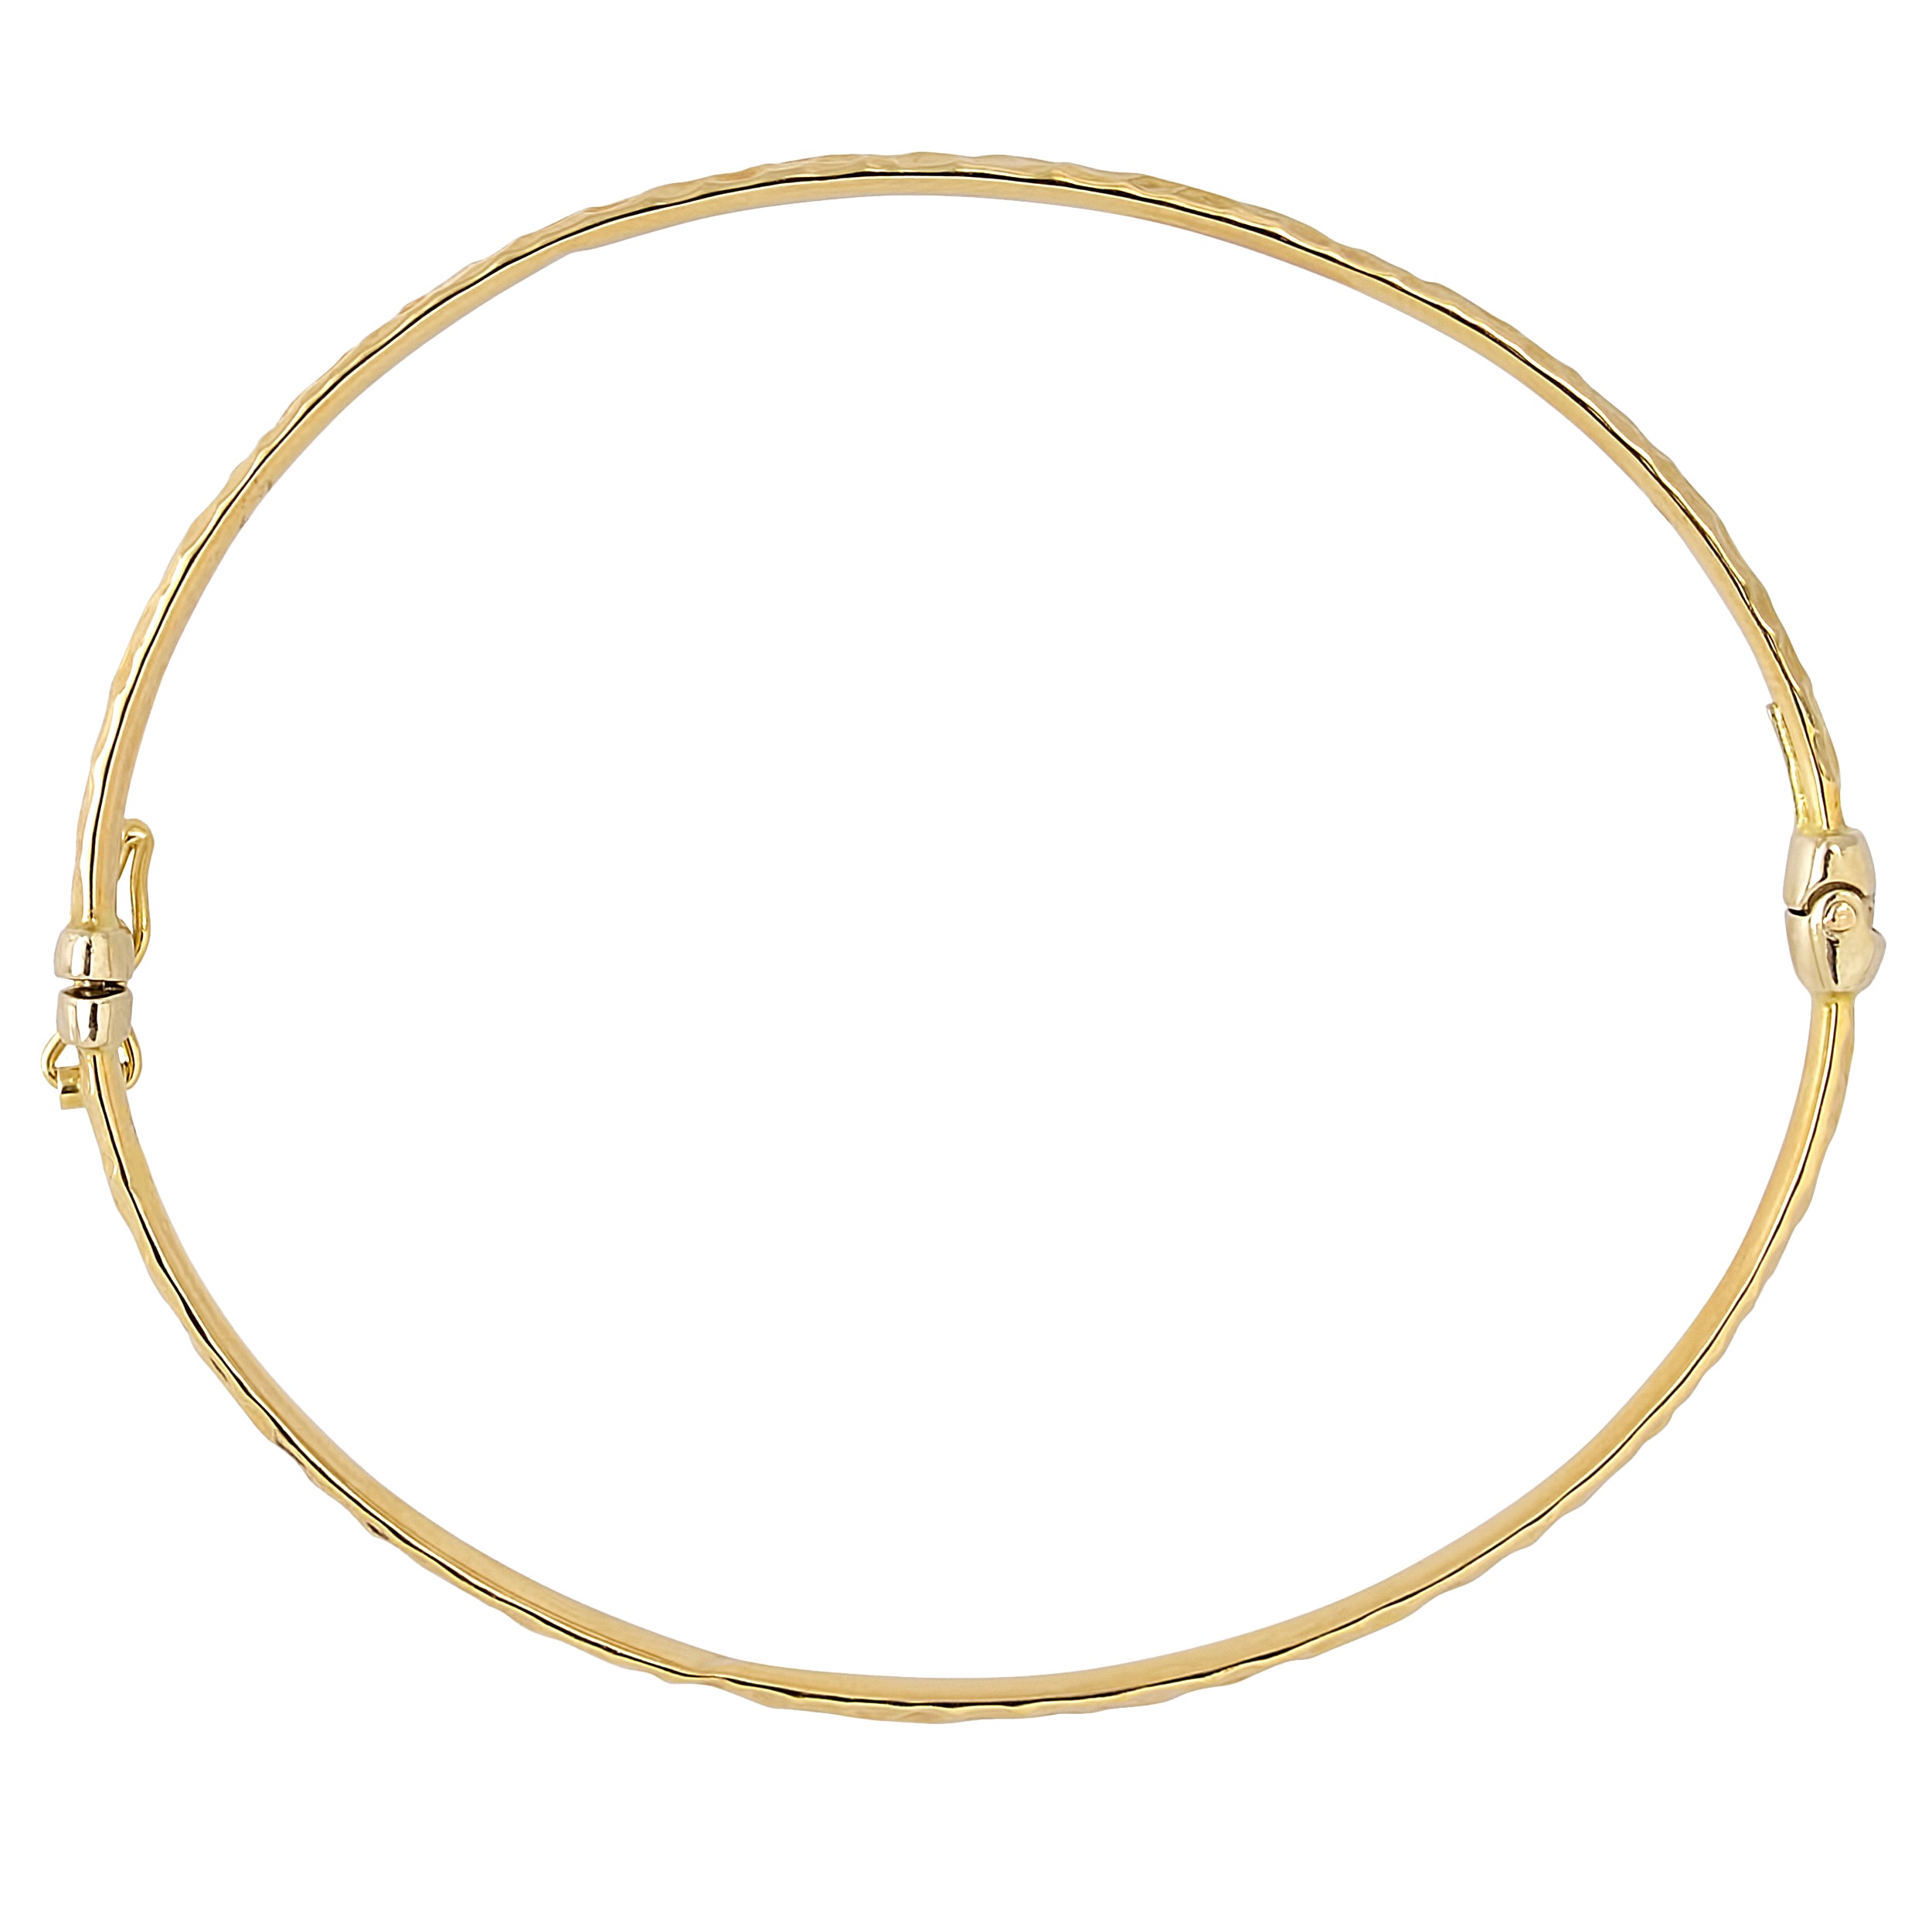 10k Yellow Gold Hammered Women's Bangle Bracelet, 7.5"